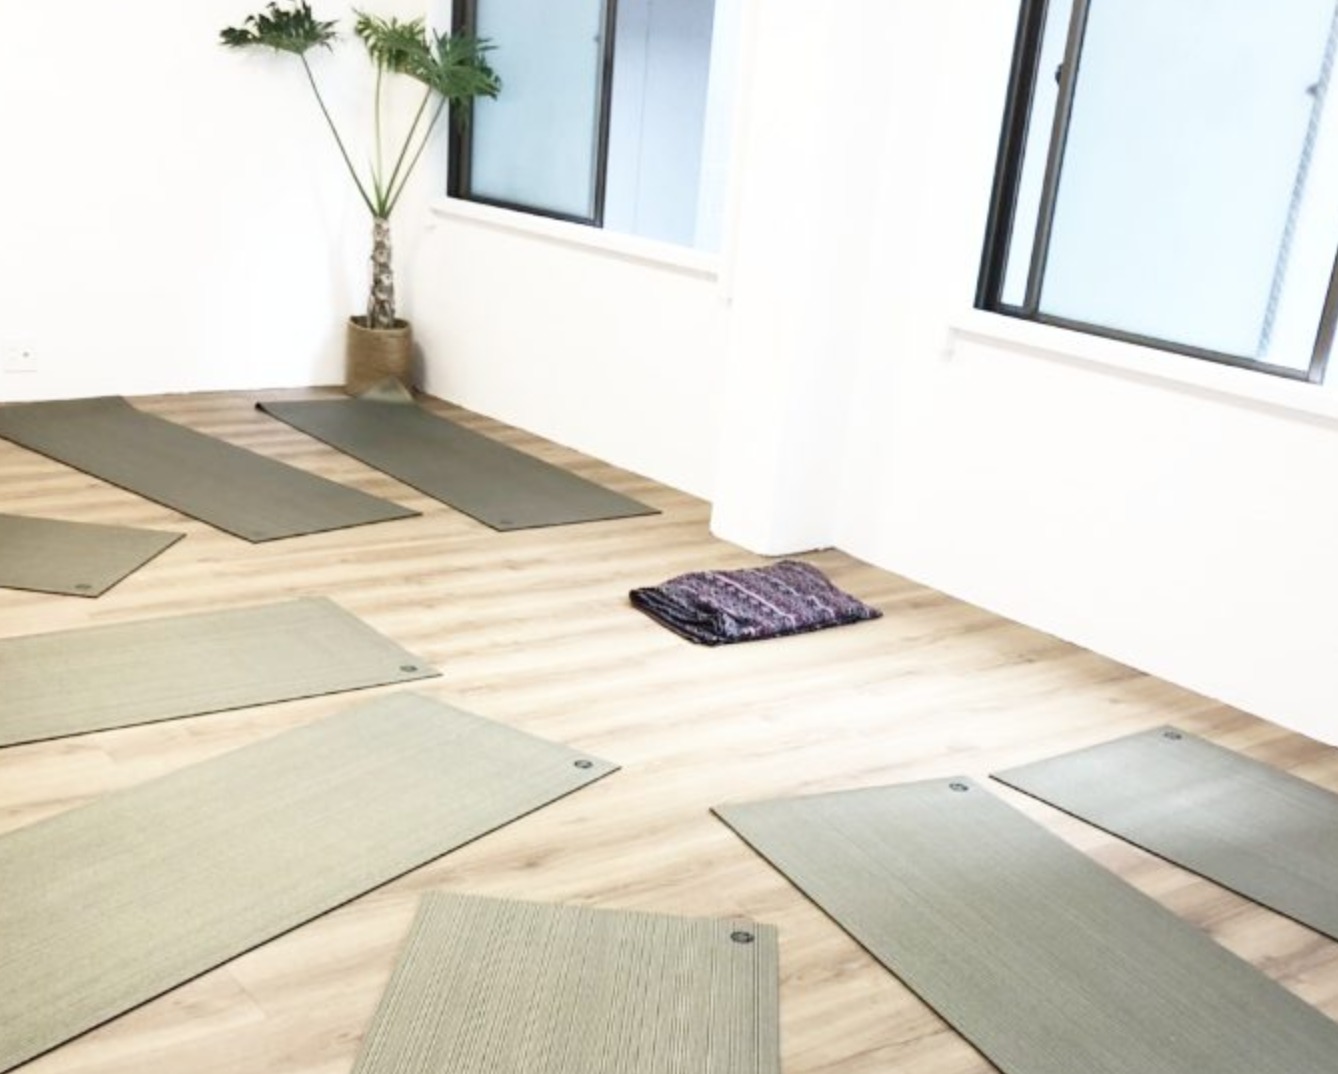 HALETA yoga studioの施設画像